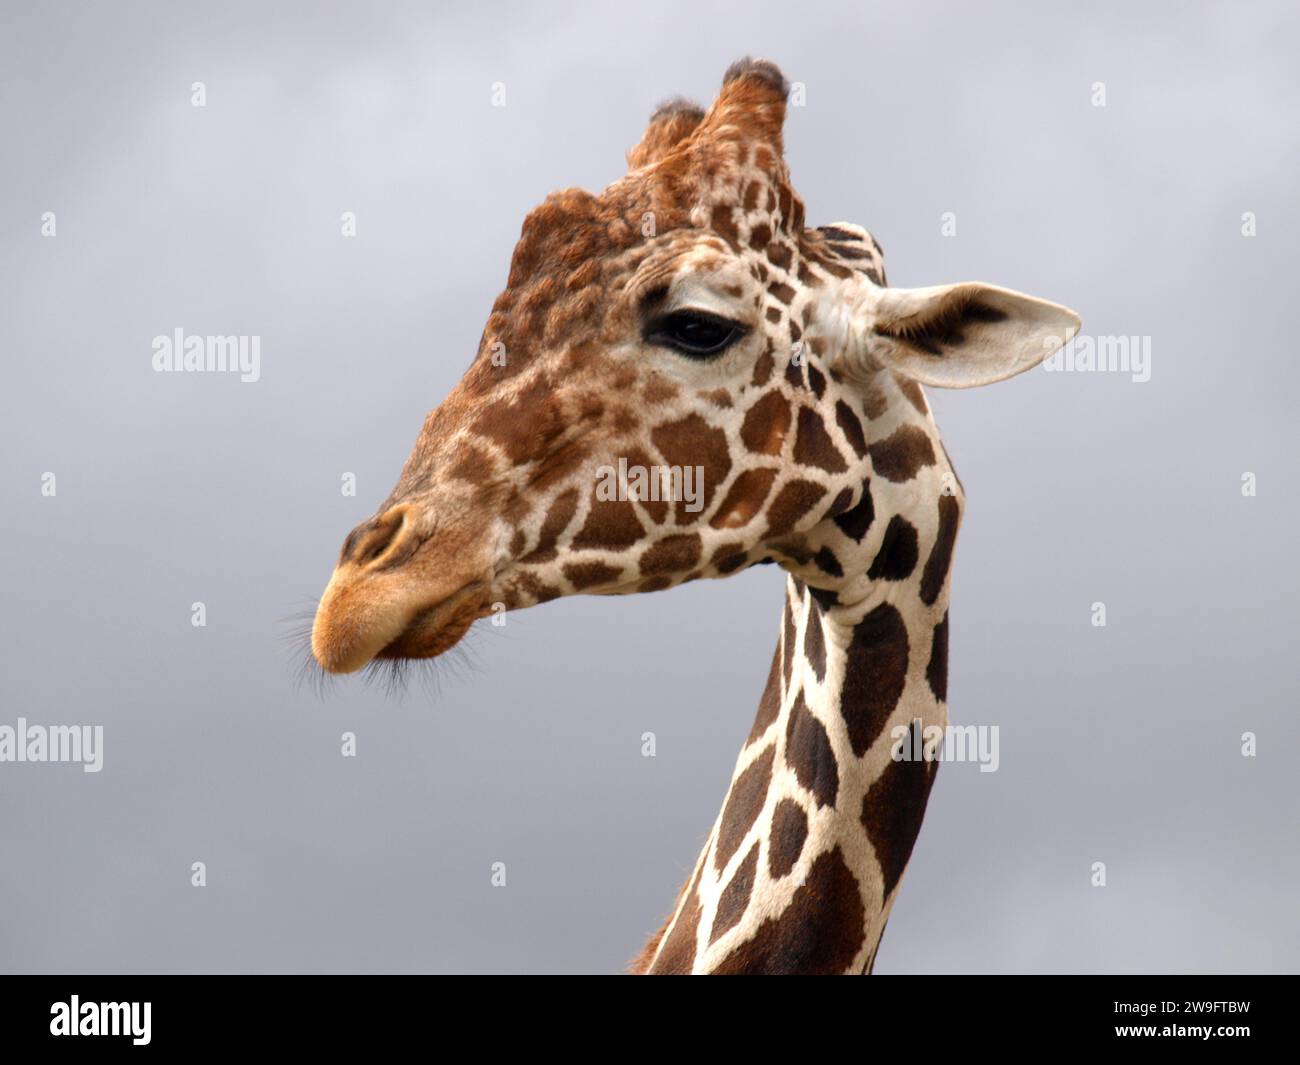 Giraffe close up in a cloudy day. Stock Photo